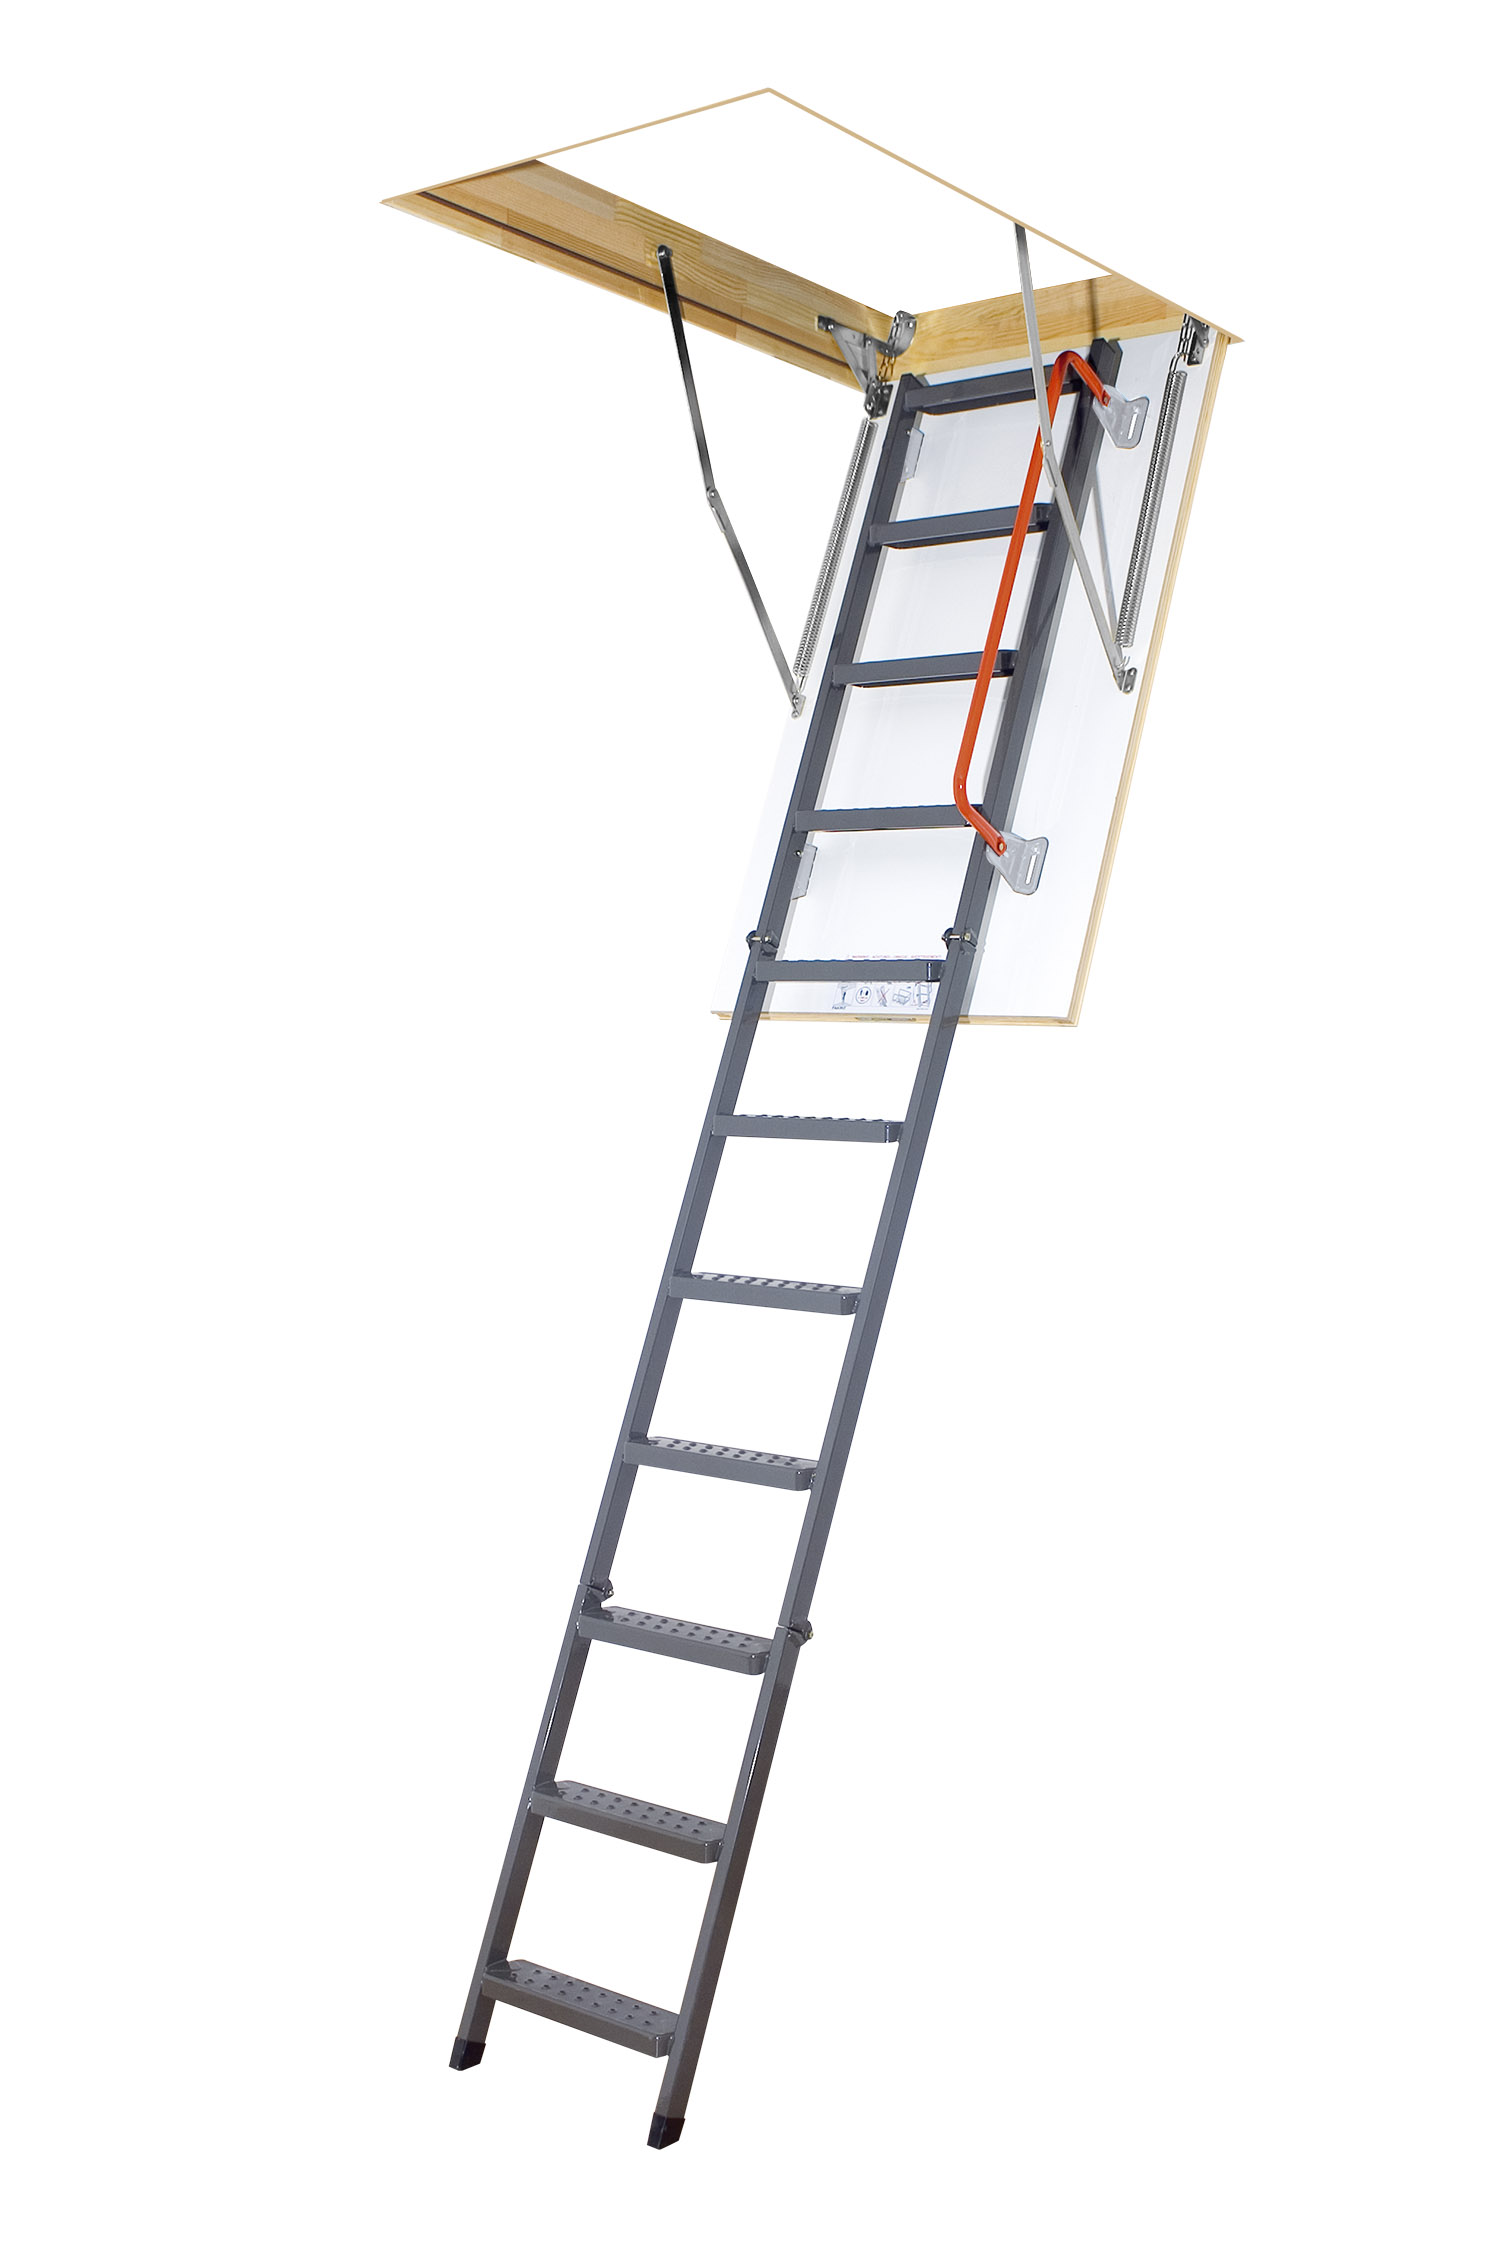 Fakro 3 Section Metal Folding Loft Ladder Lmk Komfort Roof Windows